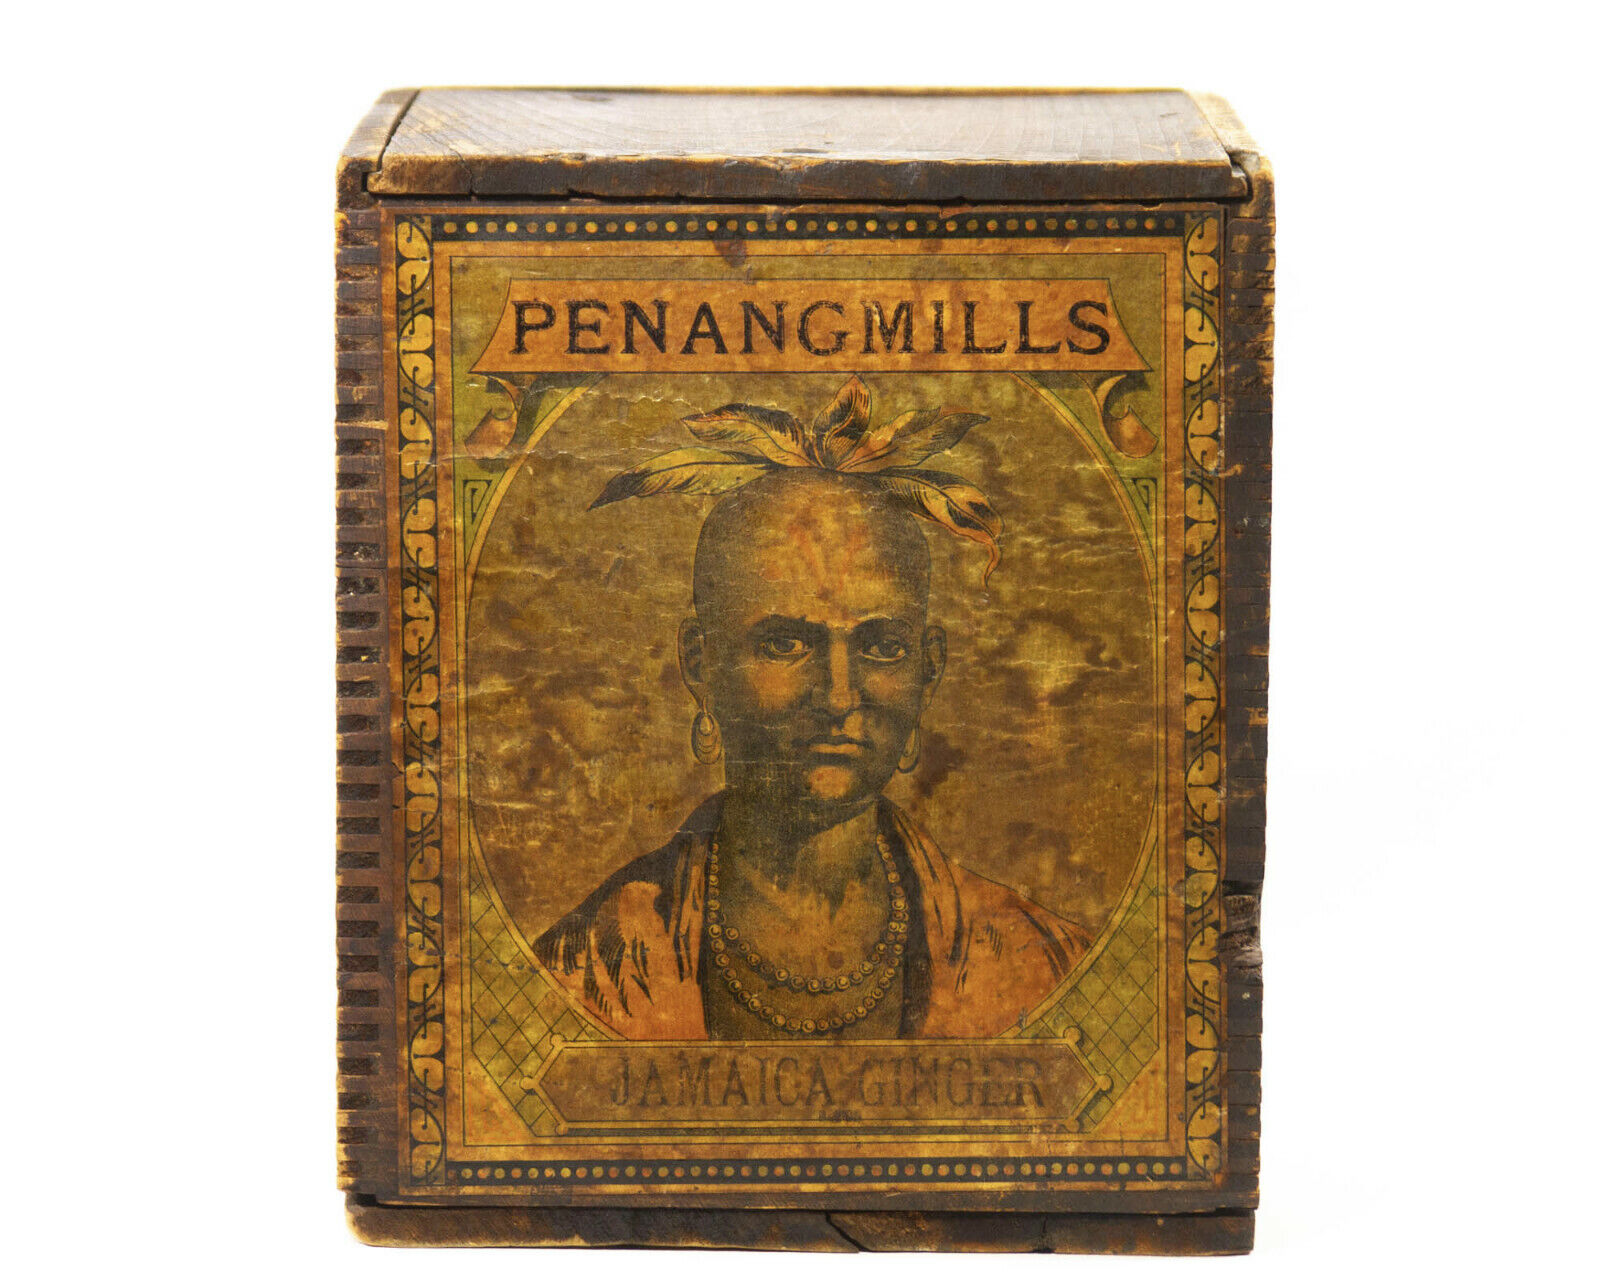 Penang Mills Jamaica Ginger Crate Advertising Indian Box Antique Drug Druggist